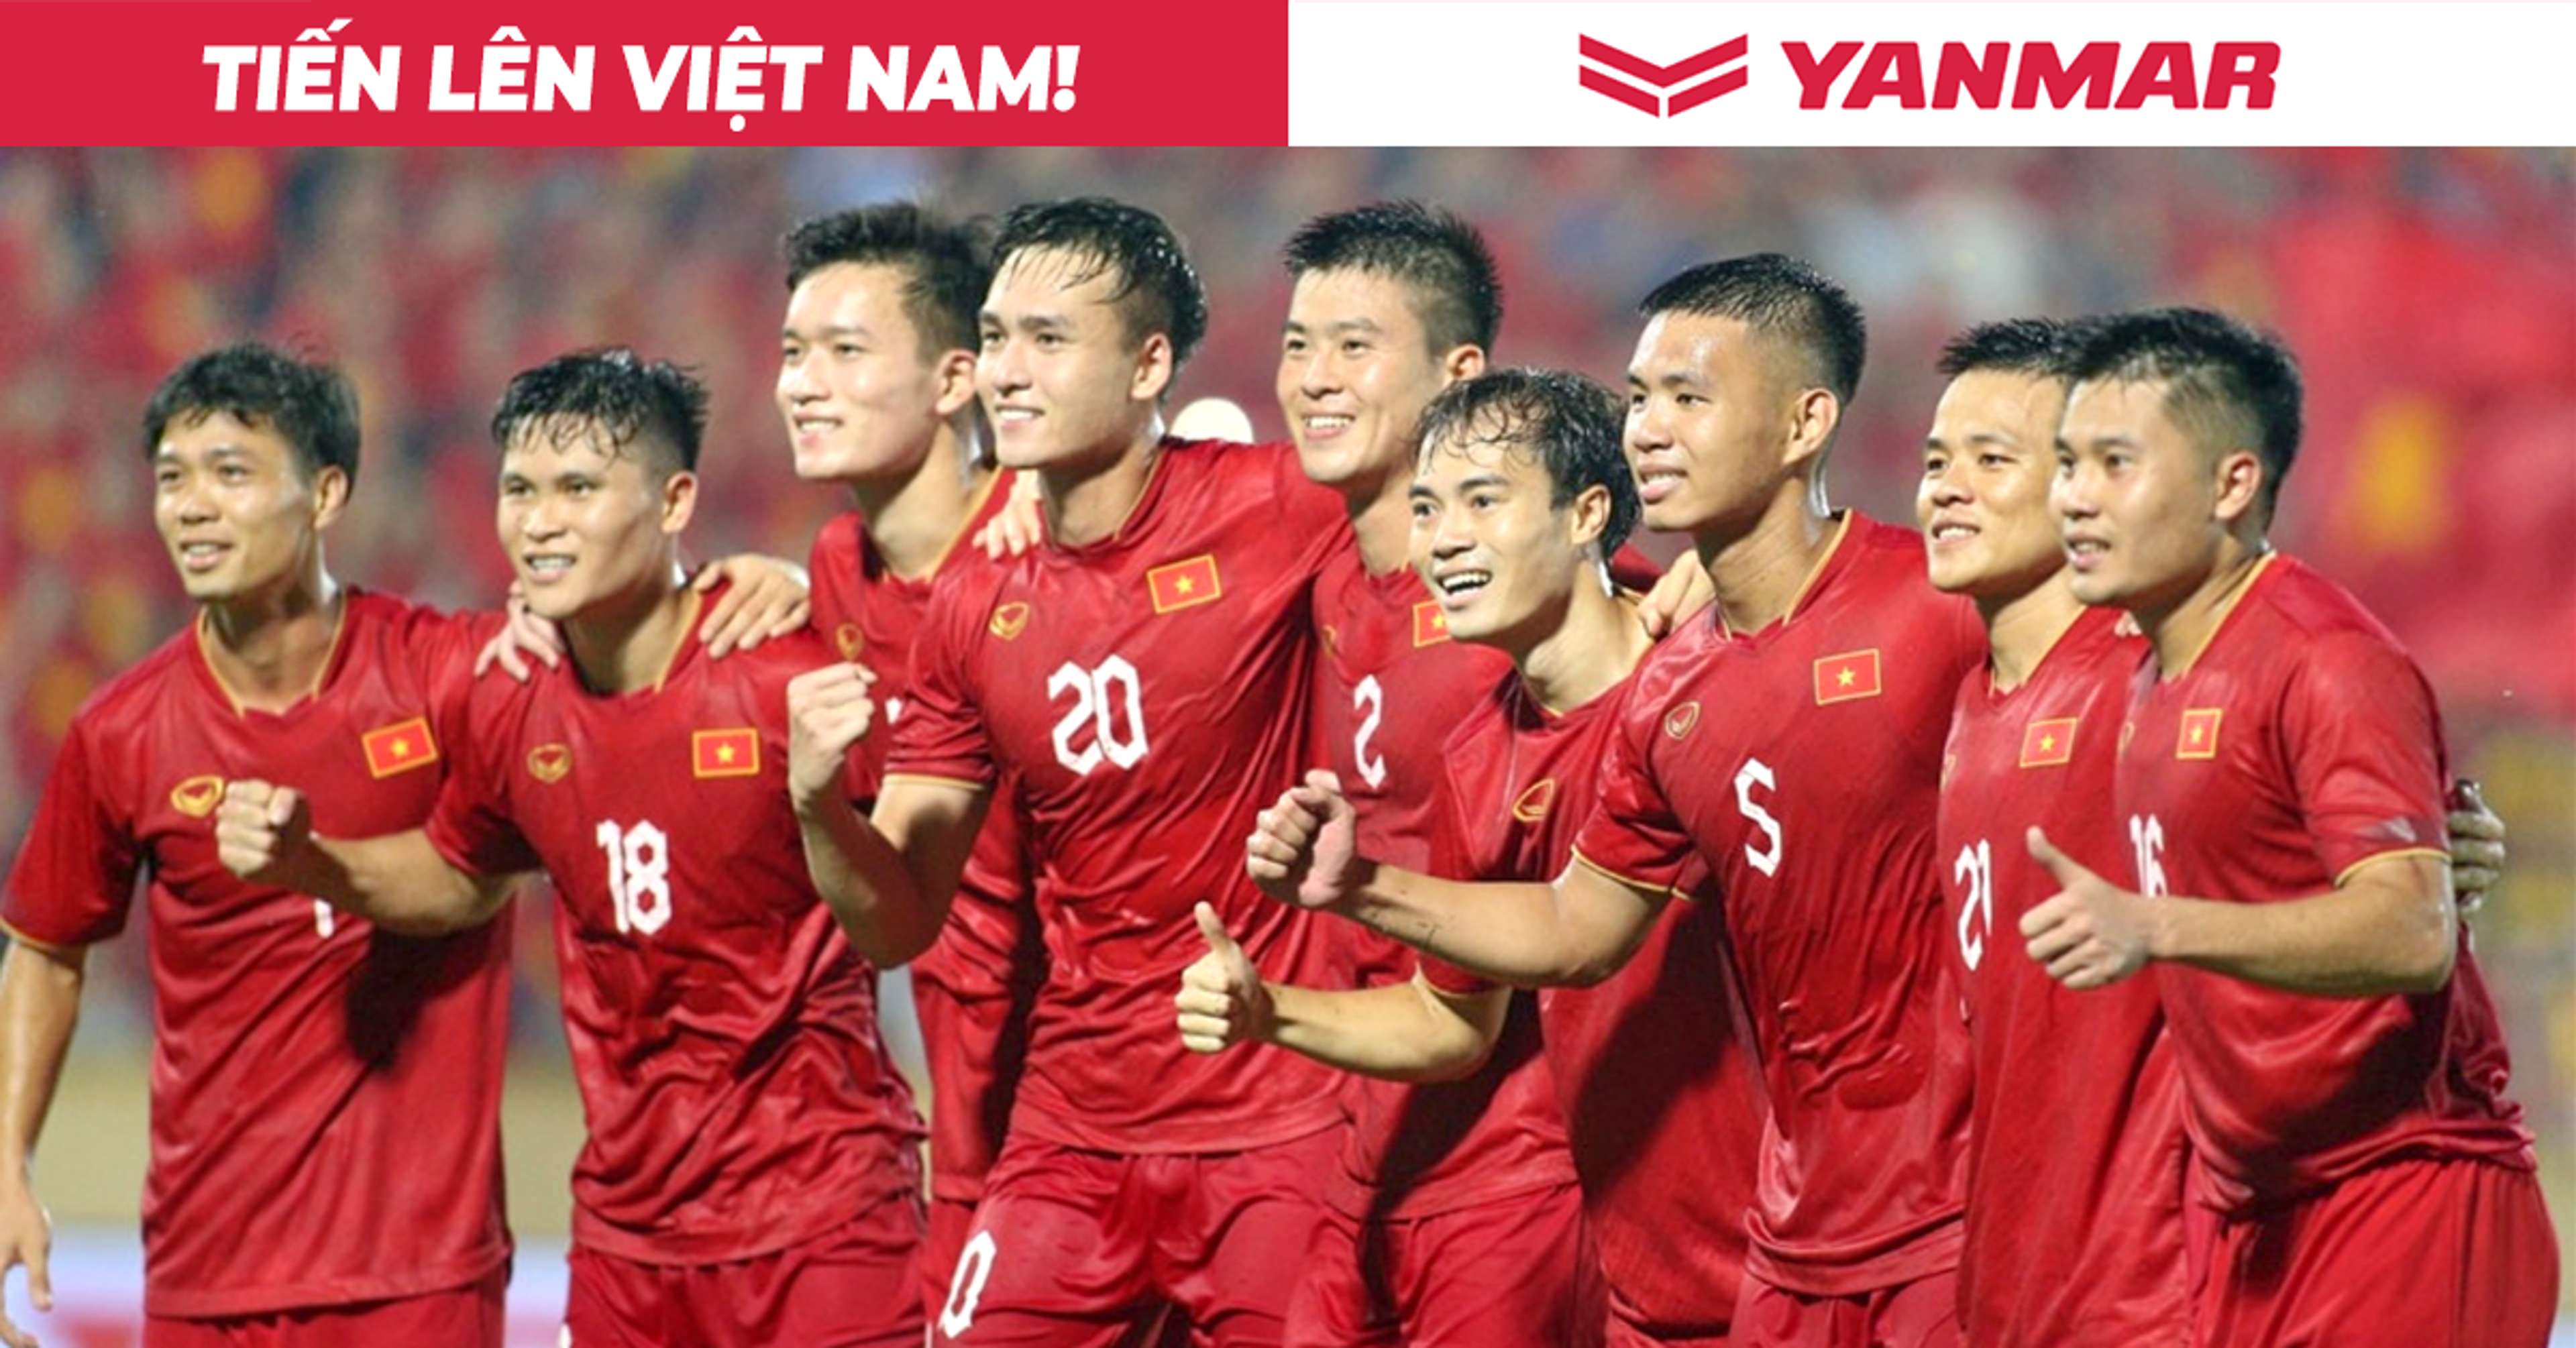 Vietnam National Team Yanmar banner